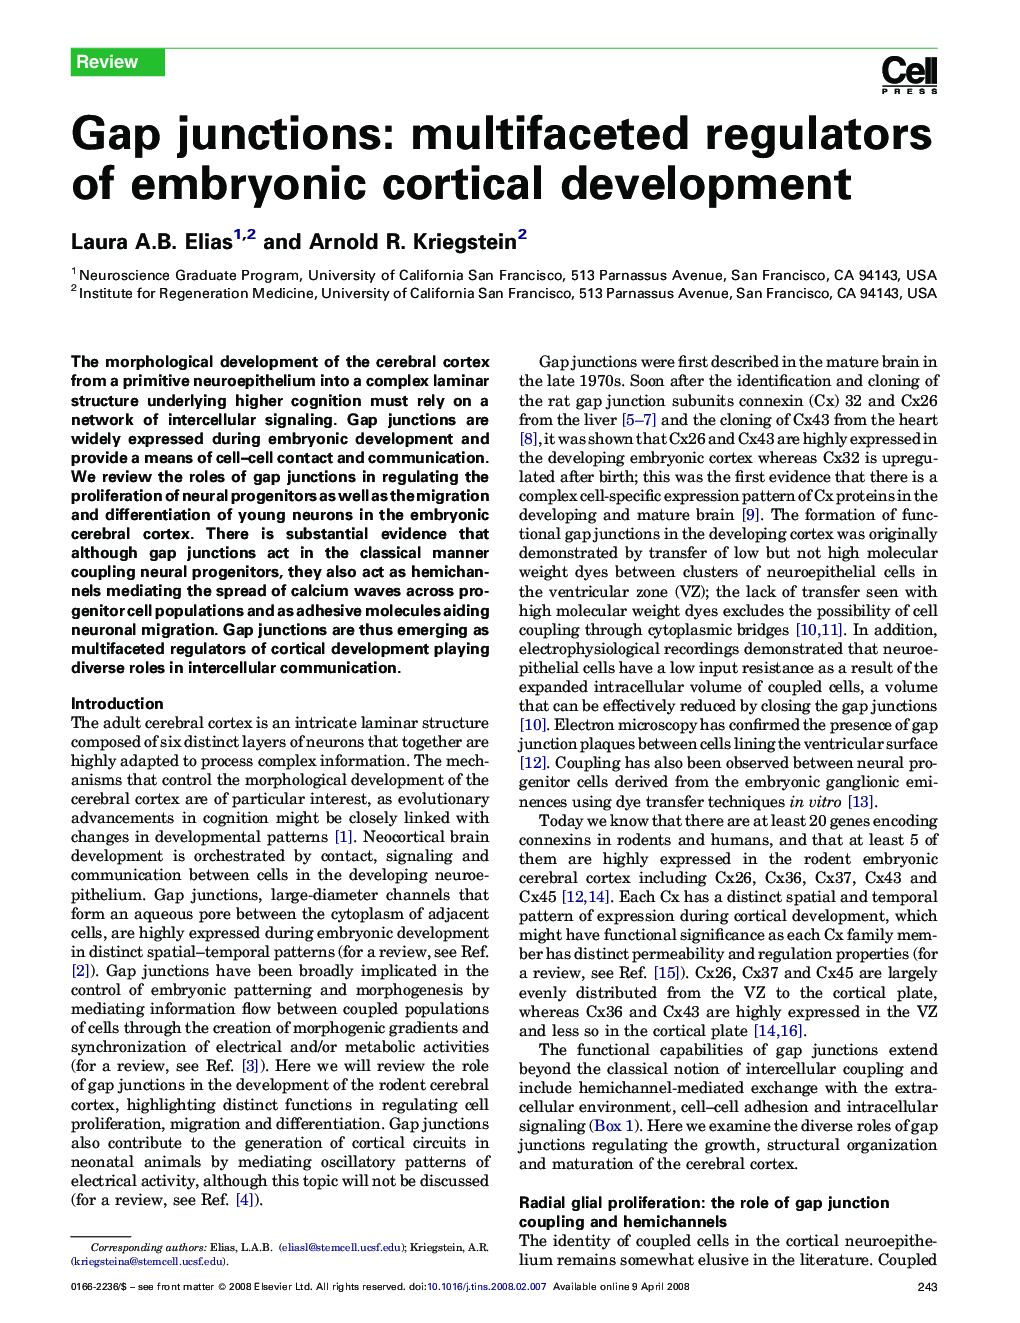 Gap junctions: multifaceted regulators of embryonic cortical development